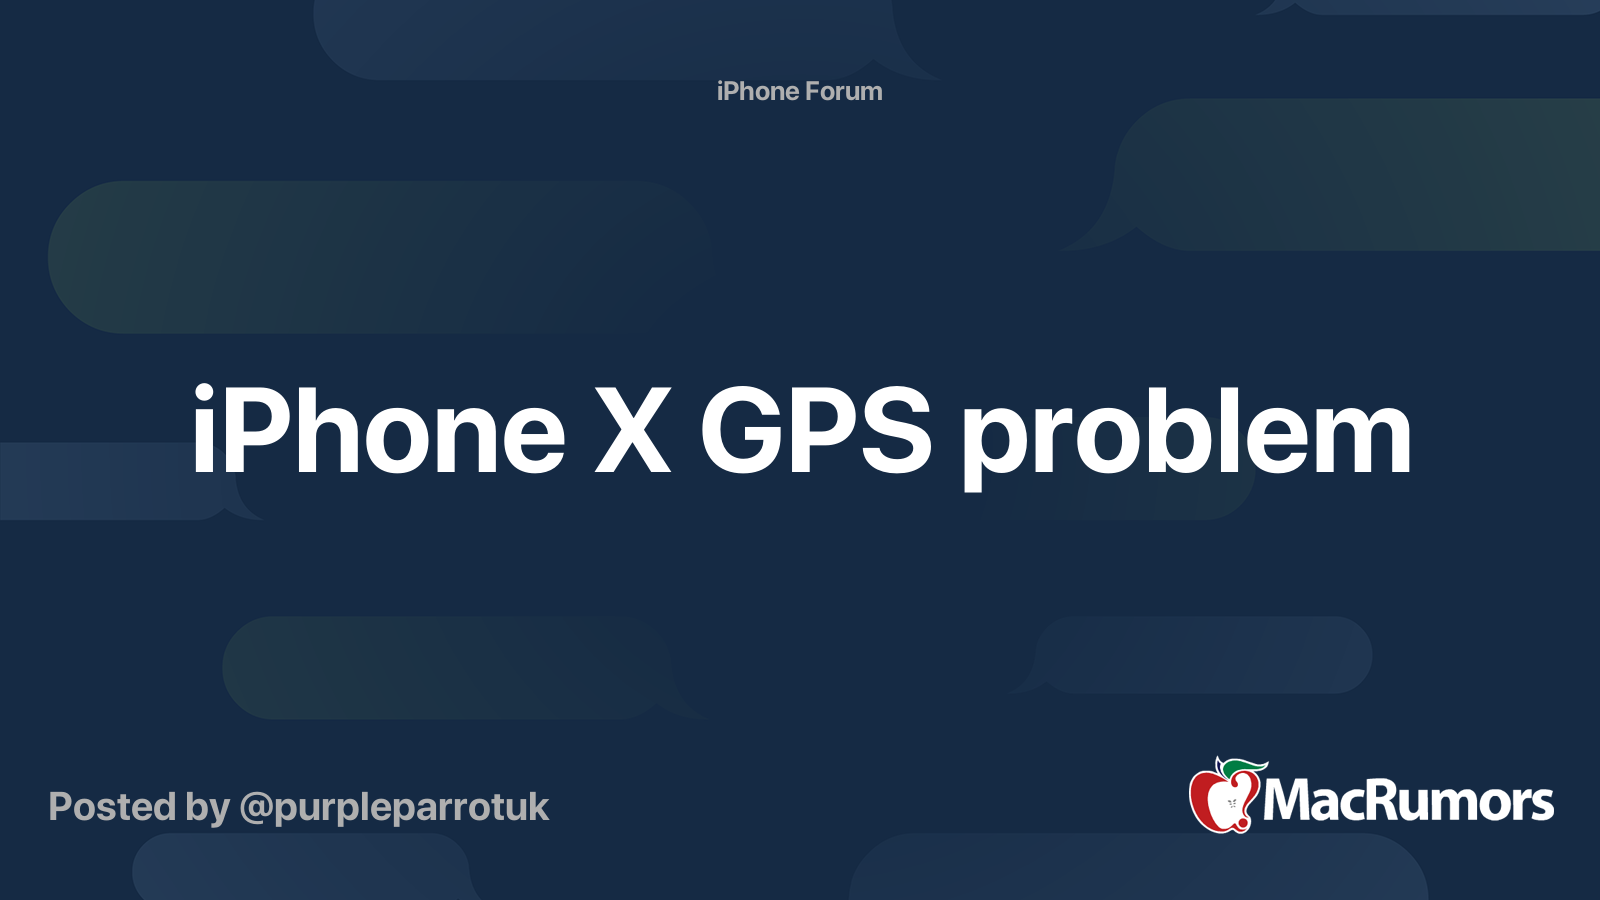 ophobe tunge strand iPhone X GPS problem | MacRumors Forums